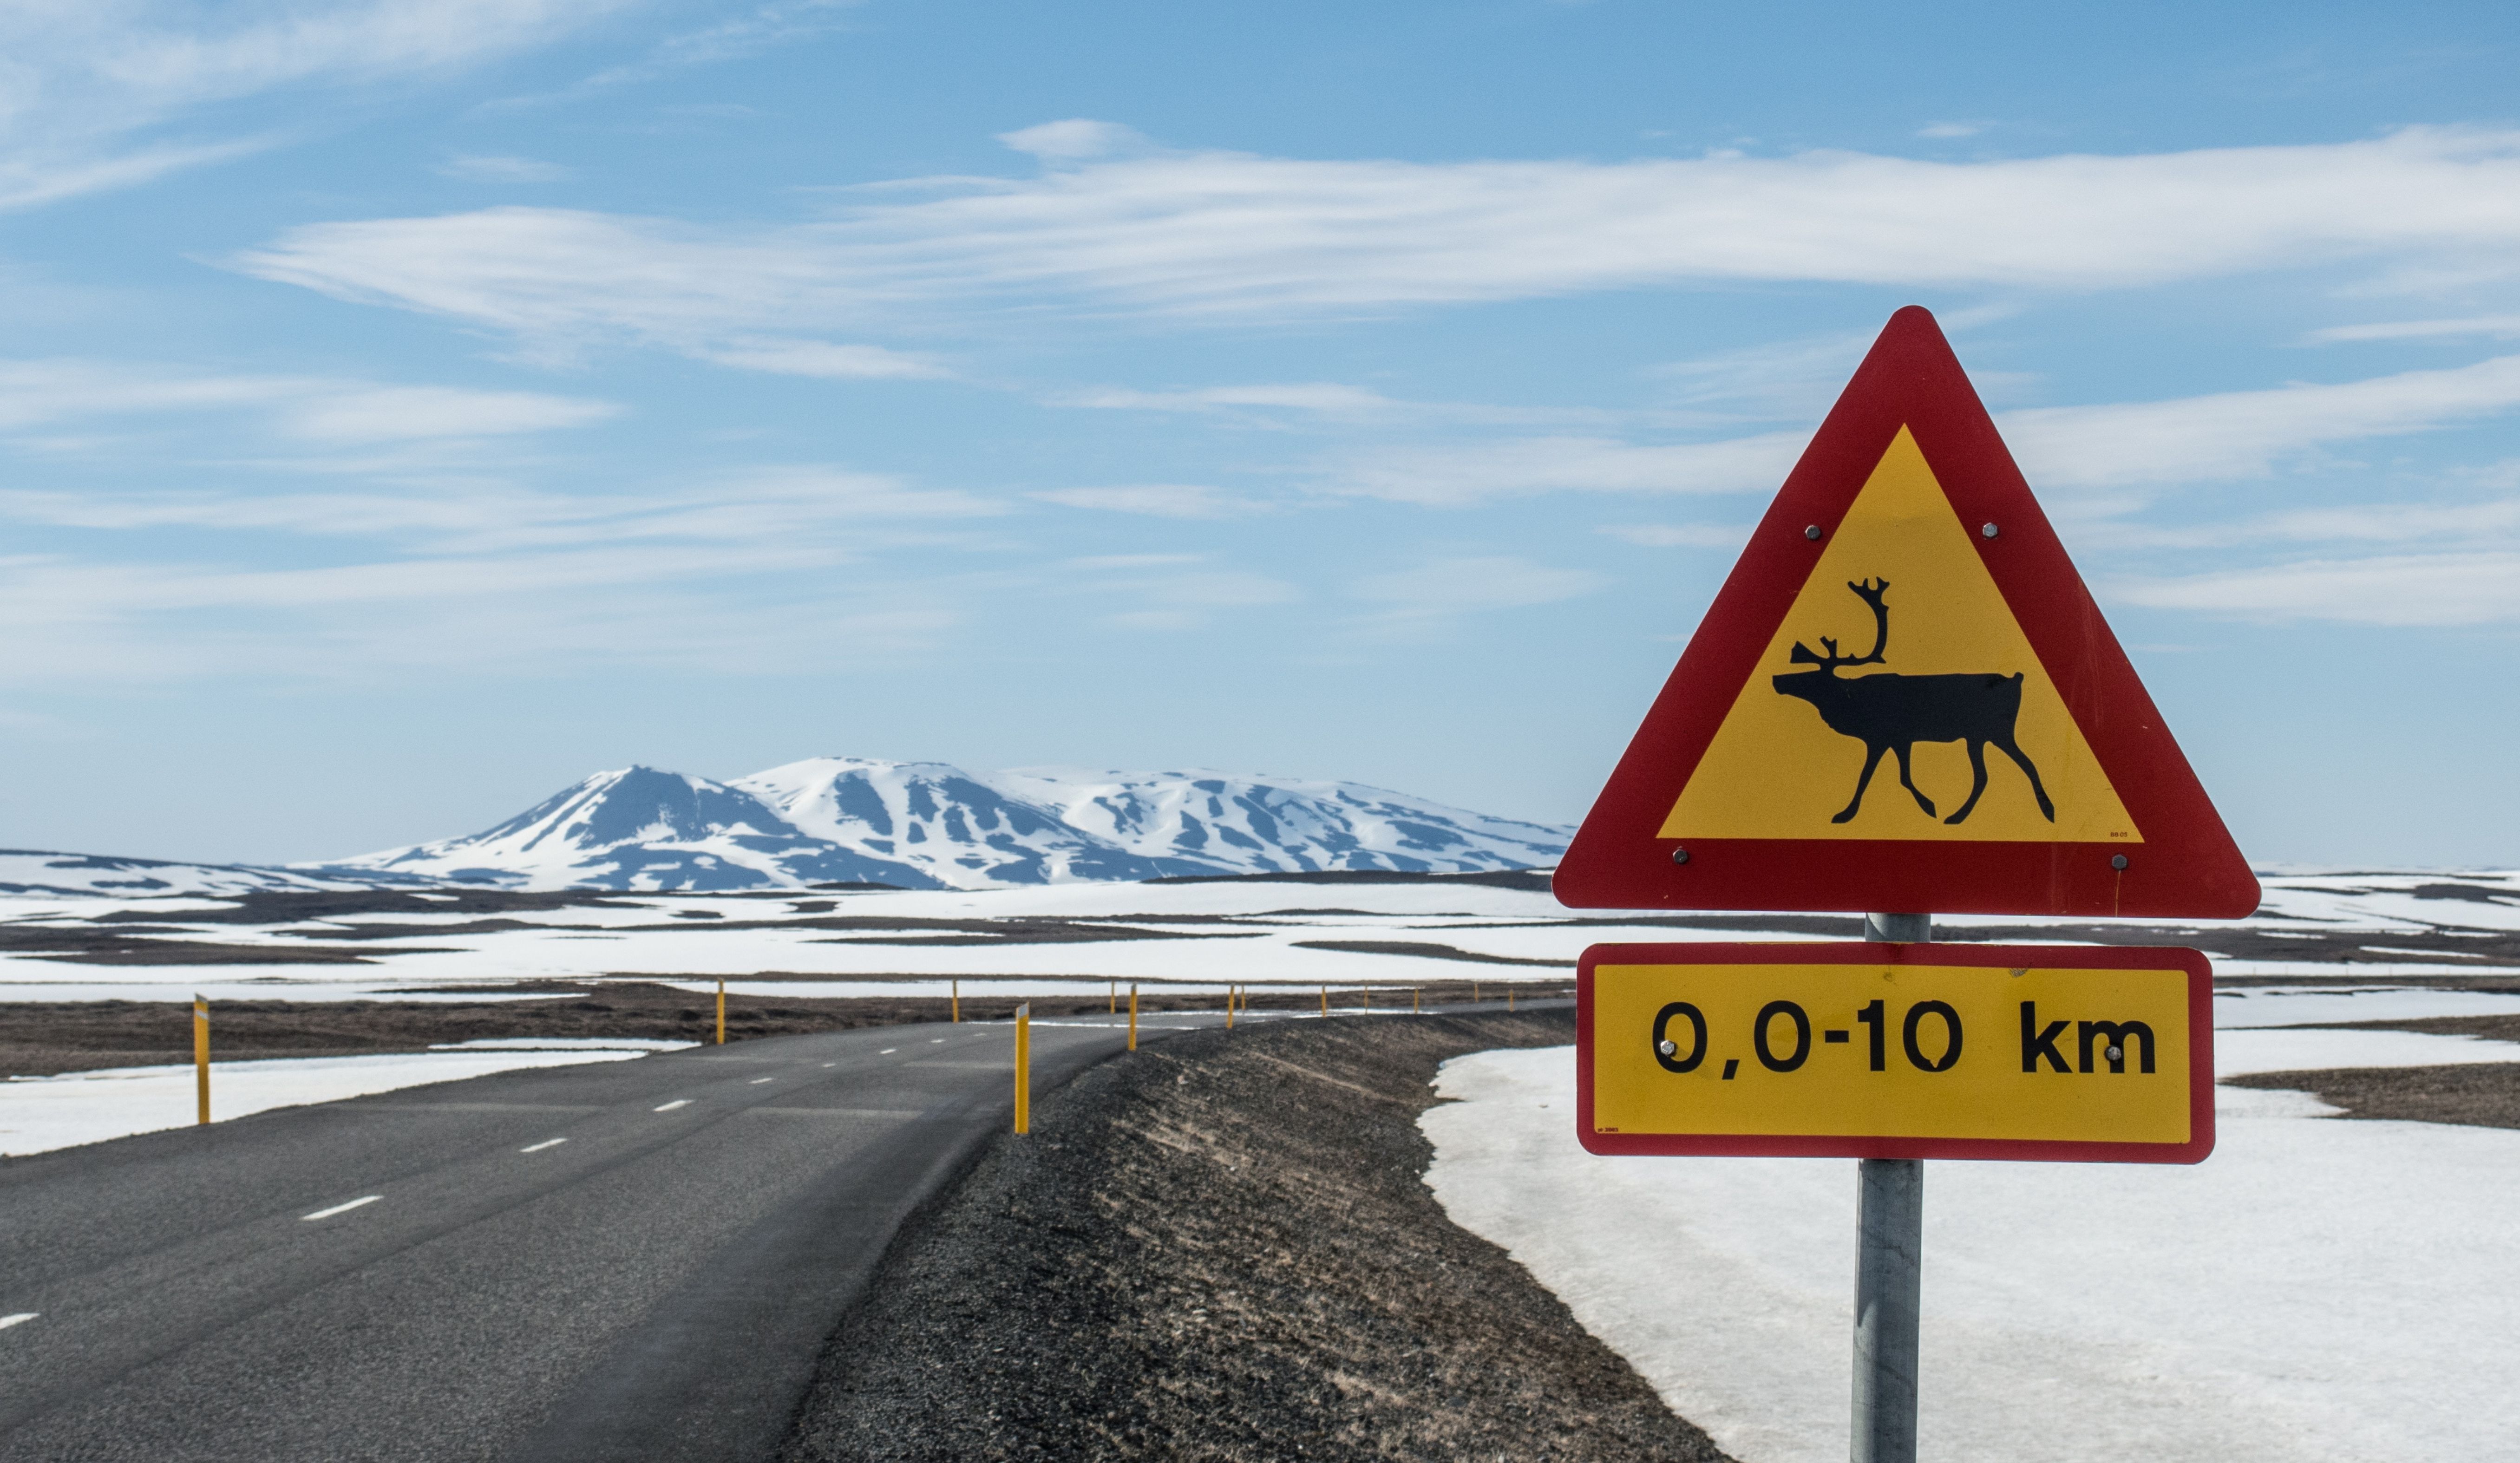 animal crossing sign iceland.jpg